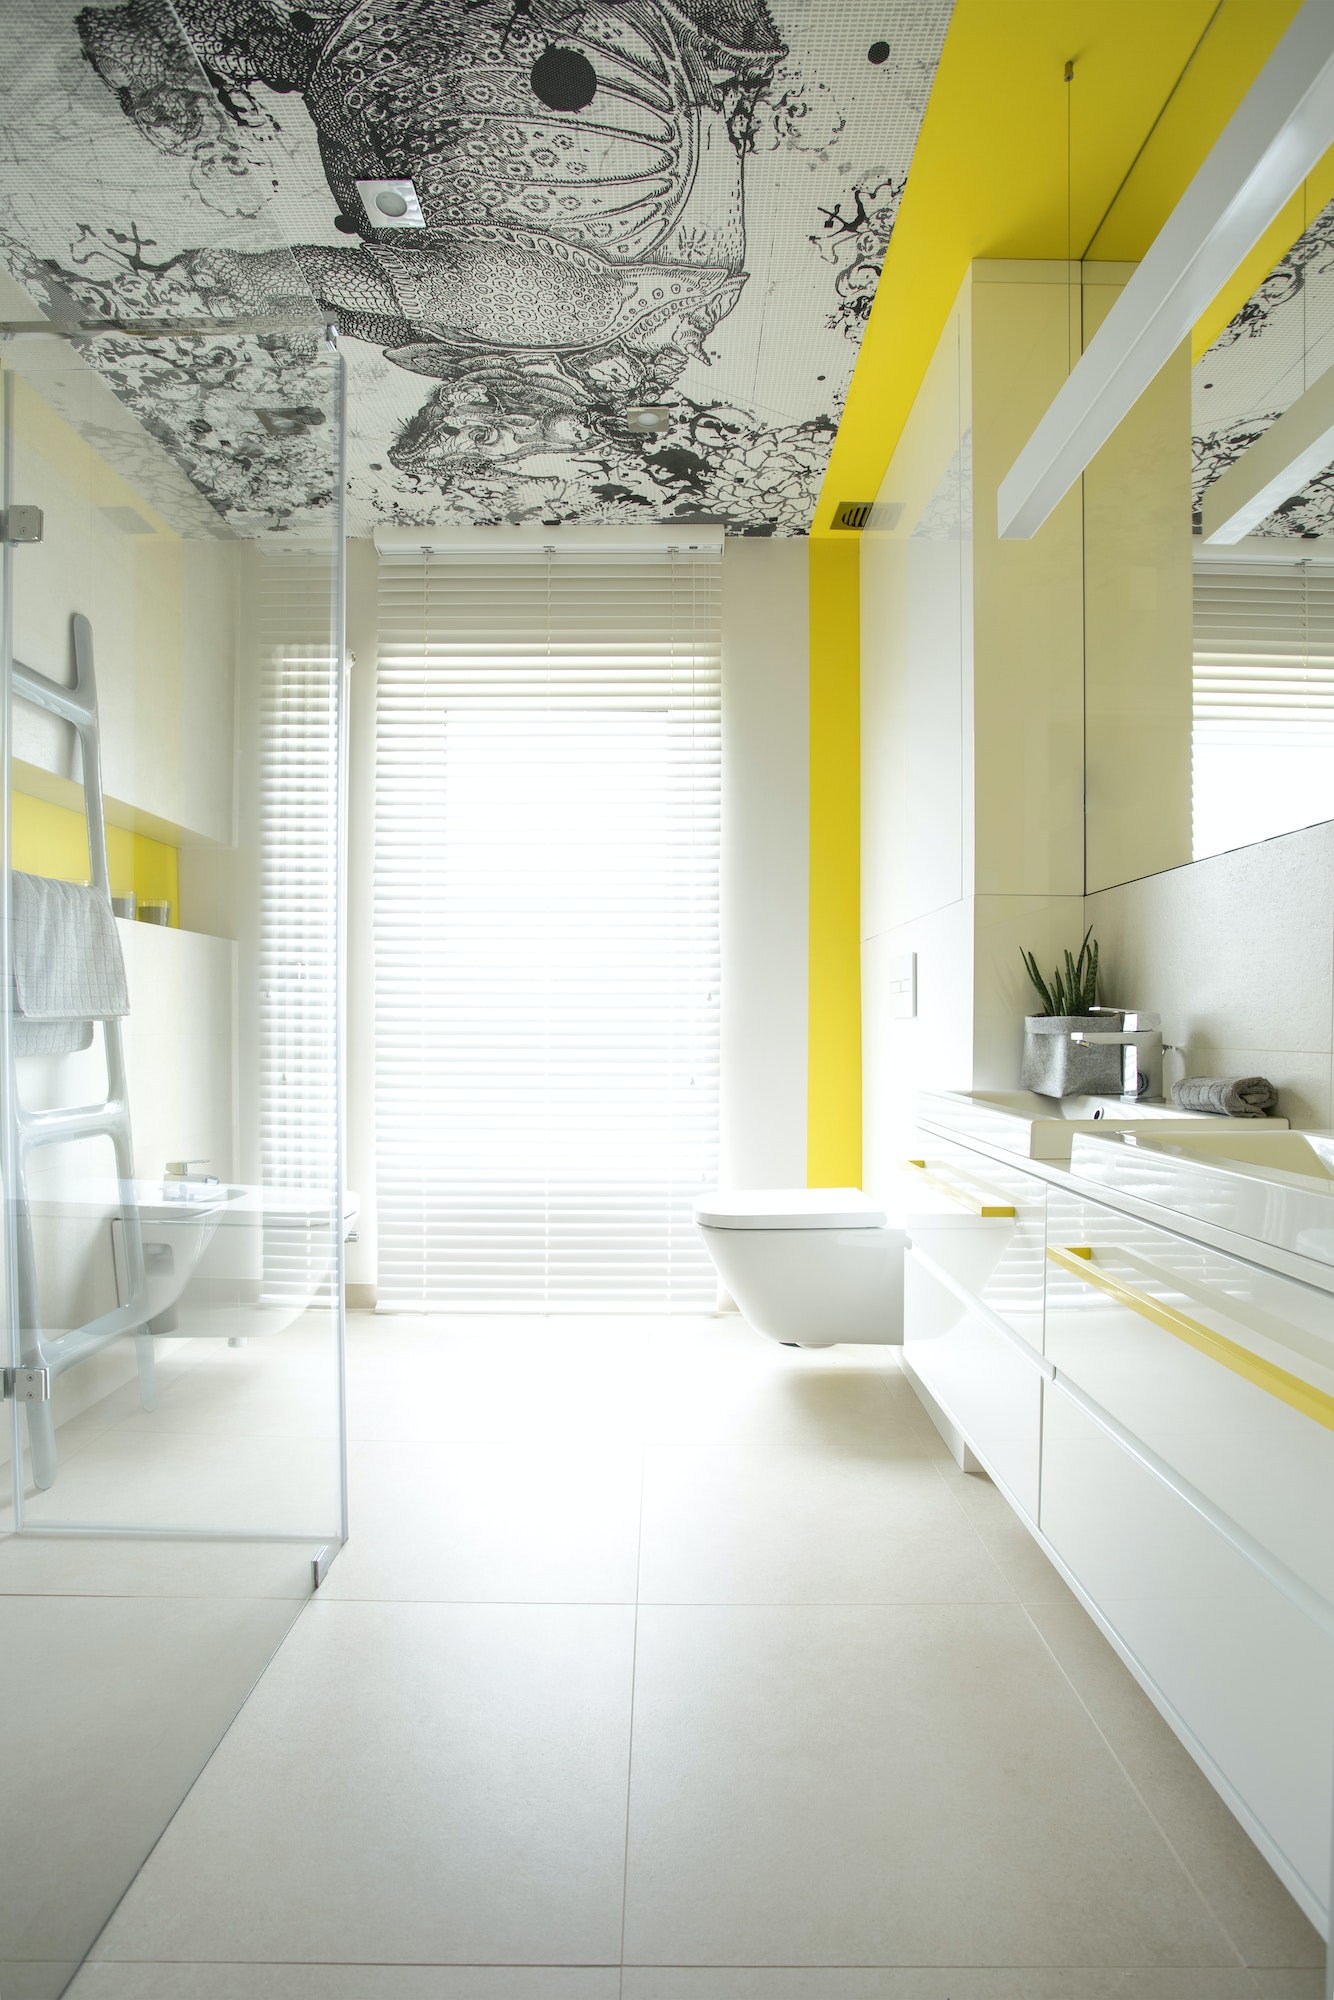 Spacious bathroom with creative design